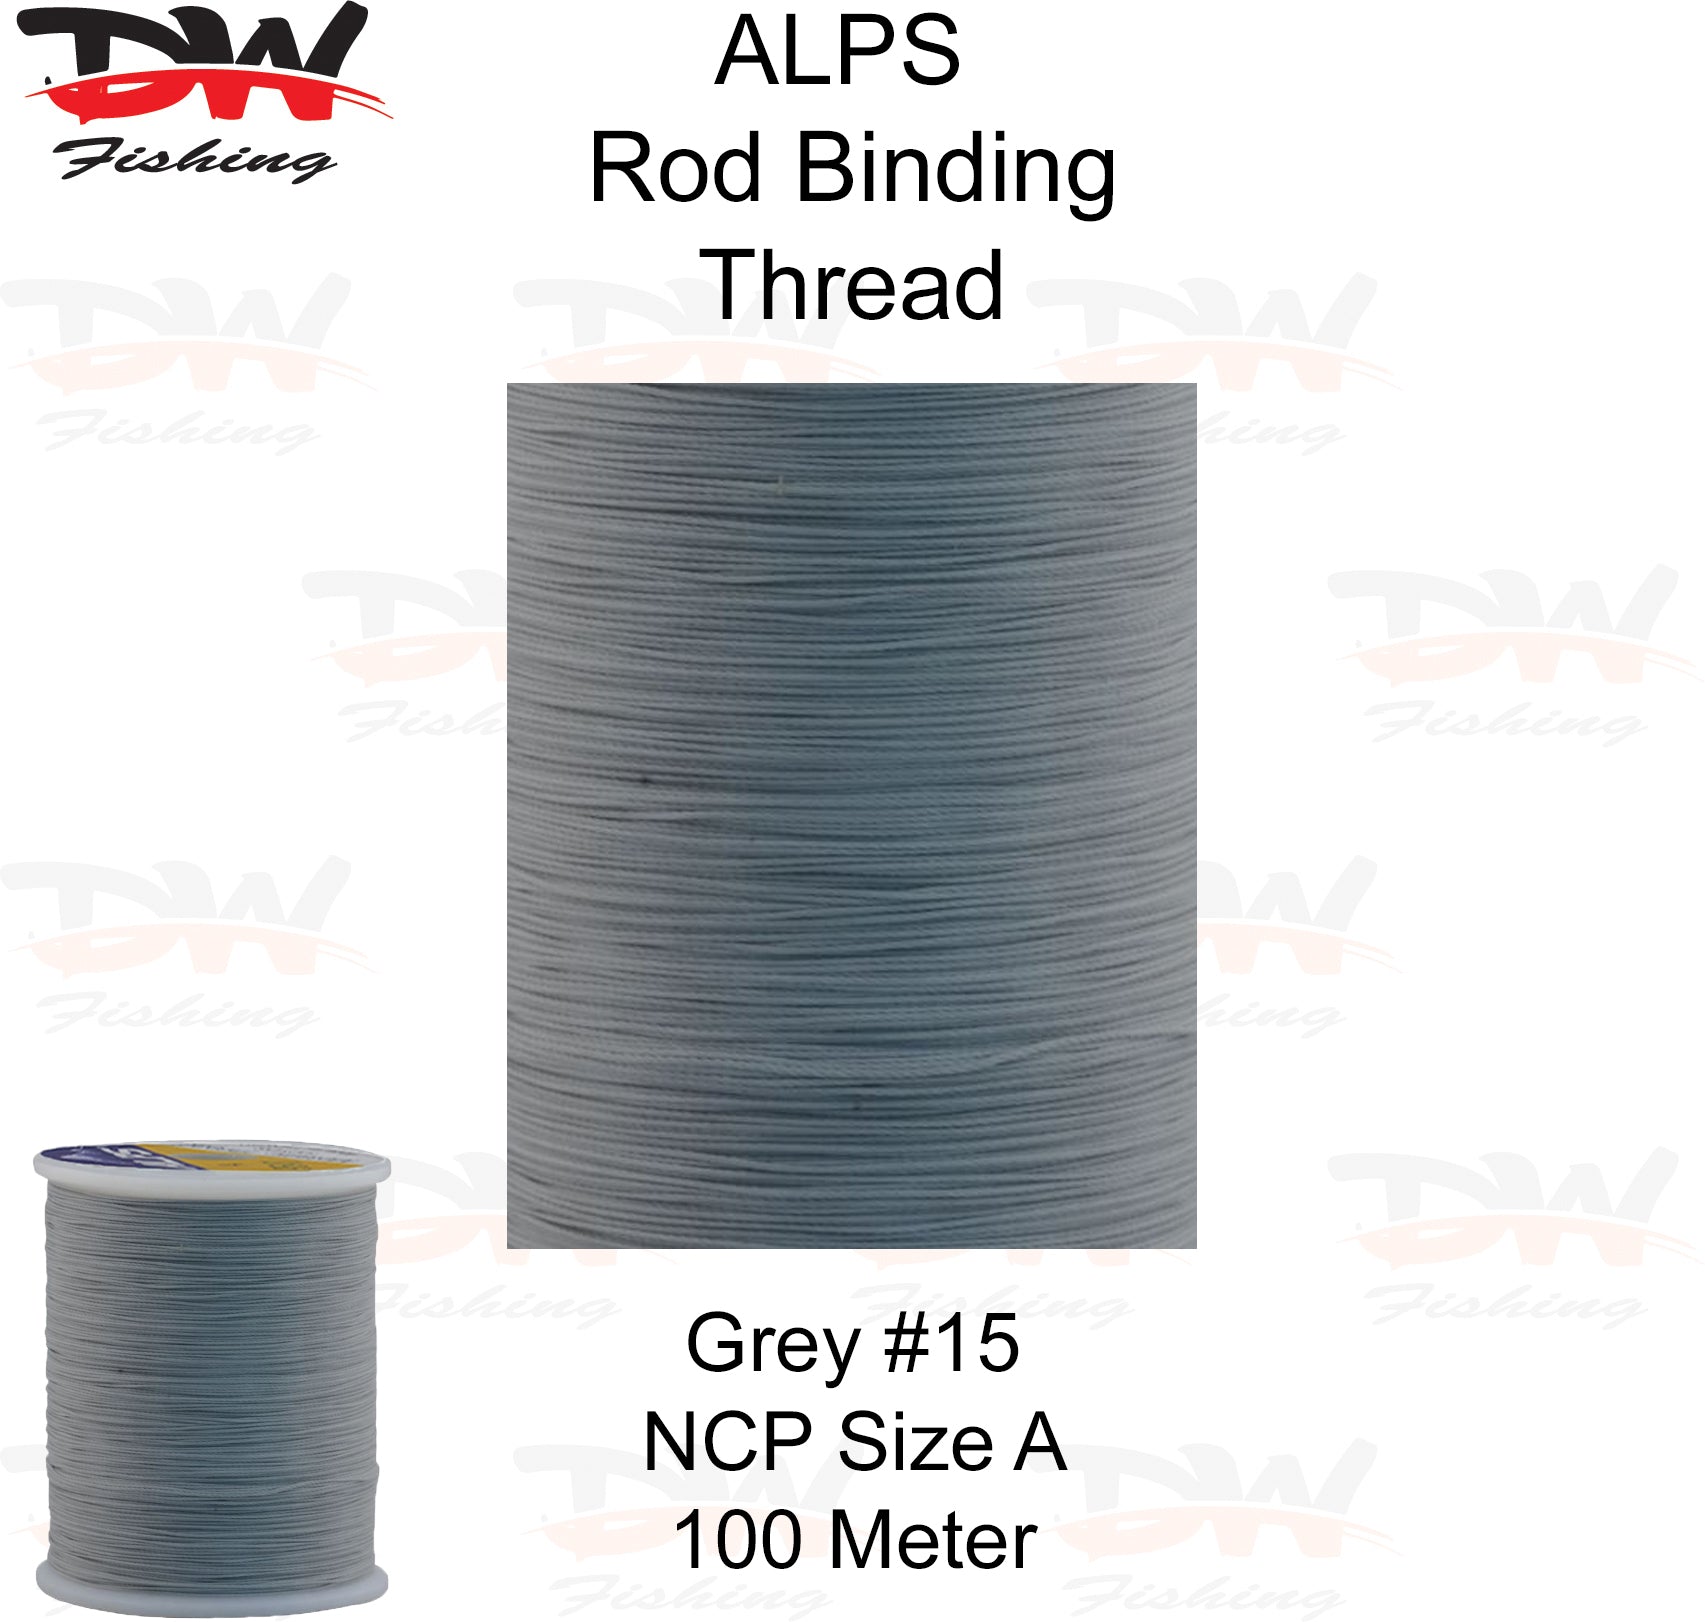 ALPS nylon rod binding thread grey